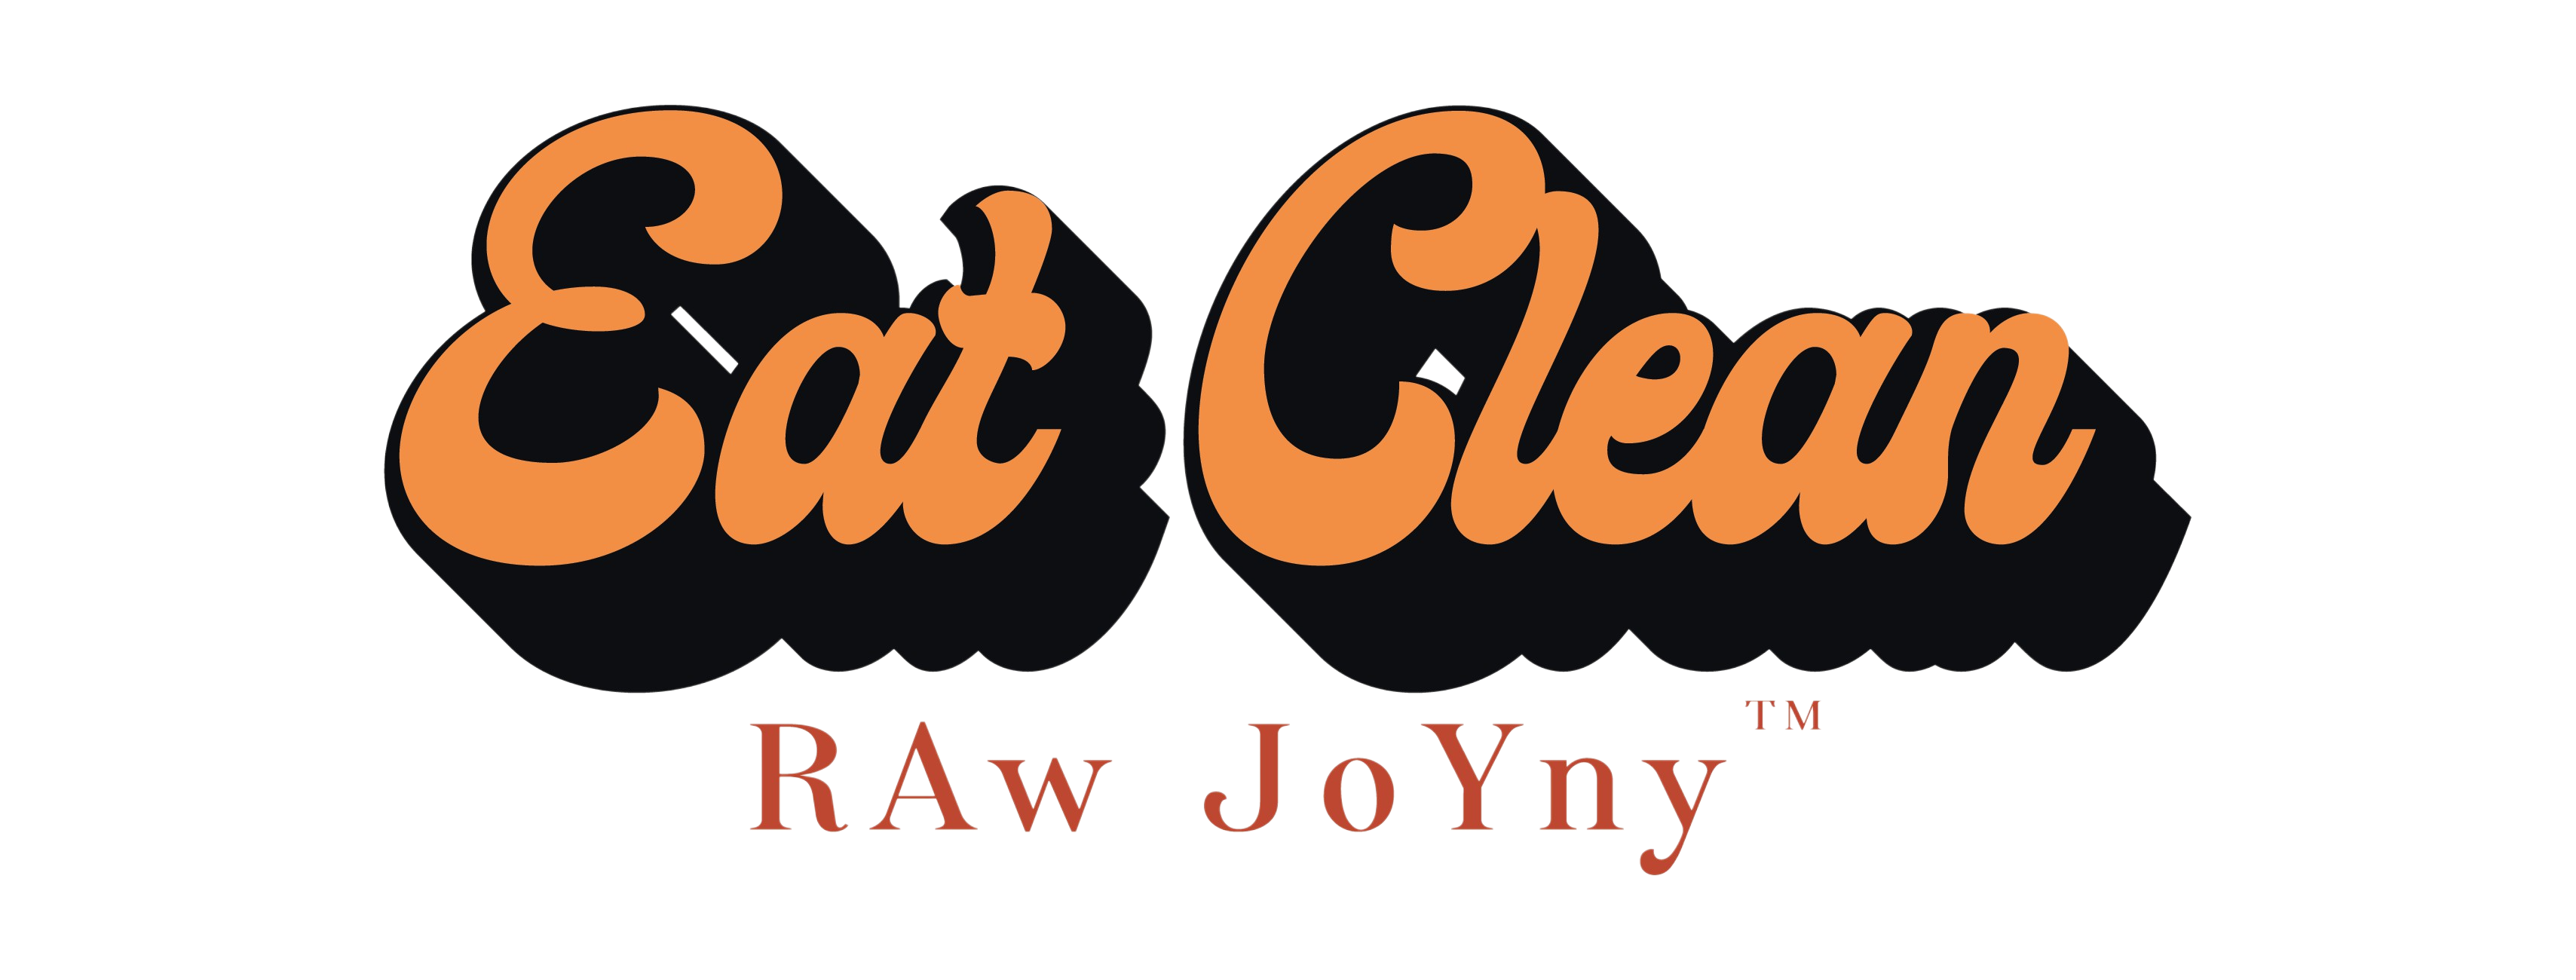 EatClean RAwJoYny LLC